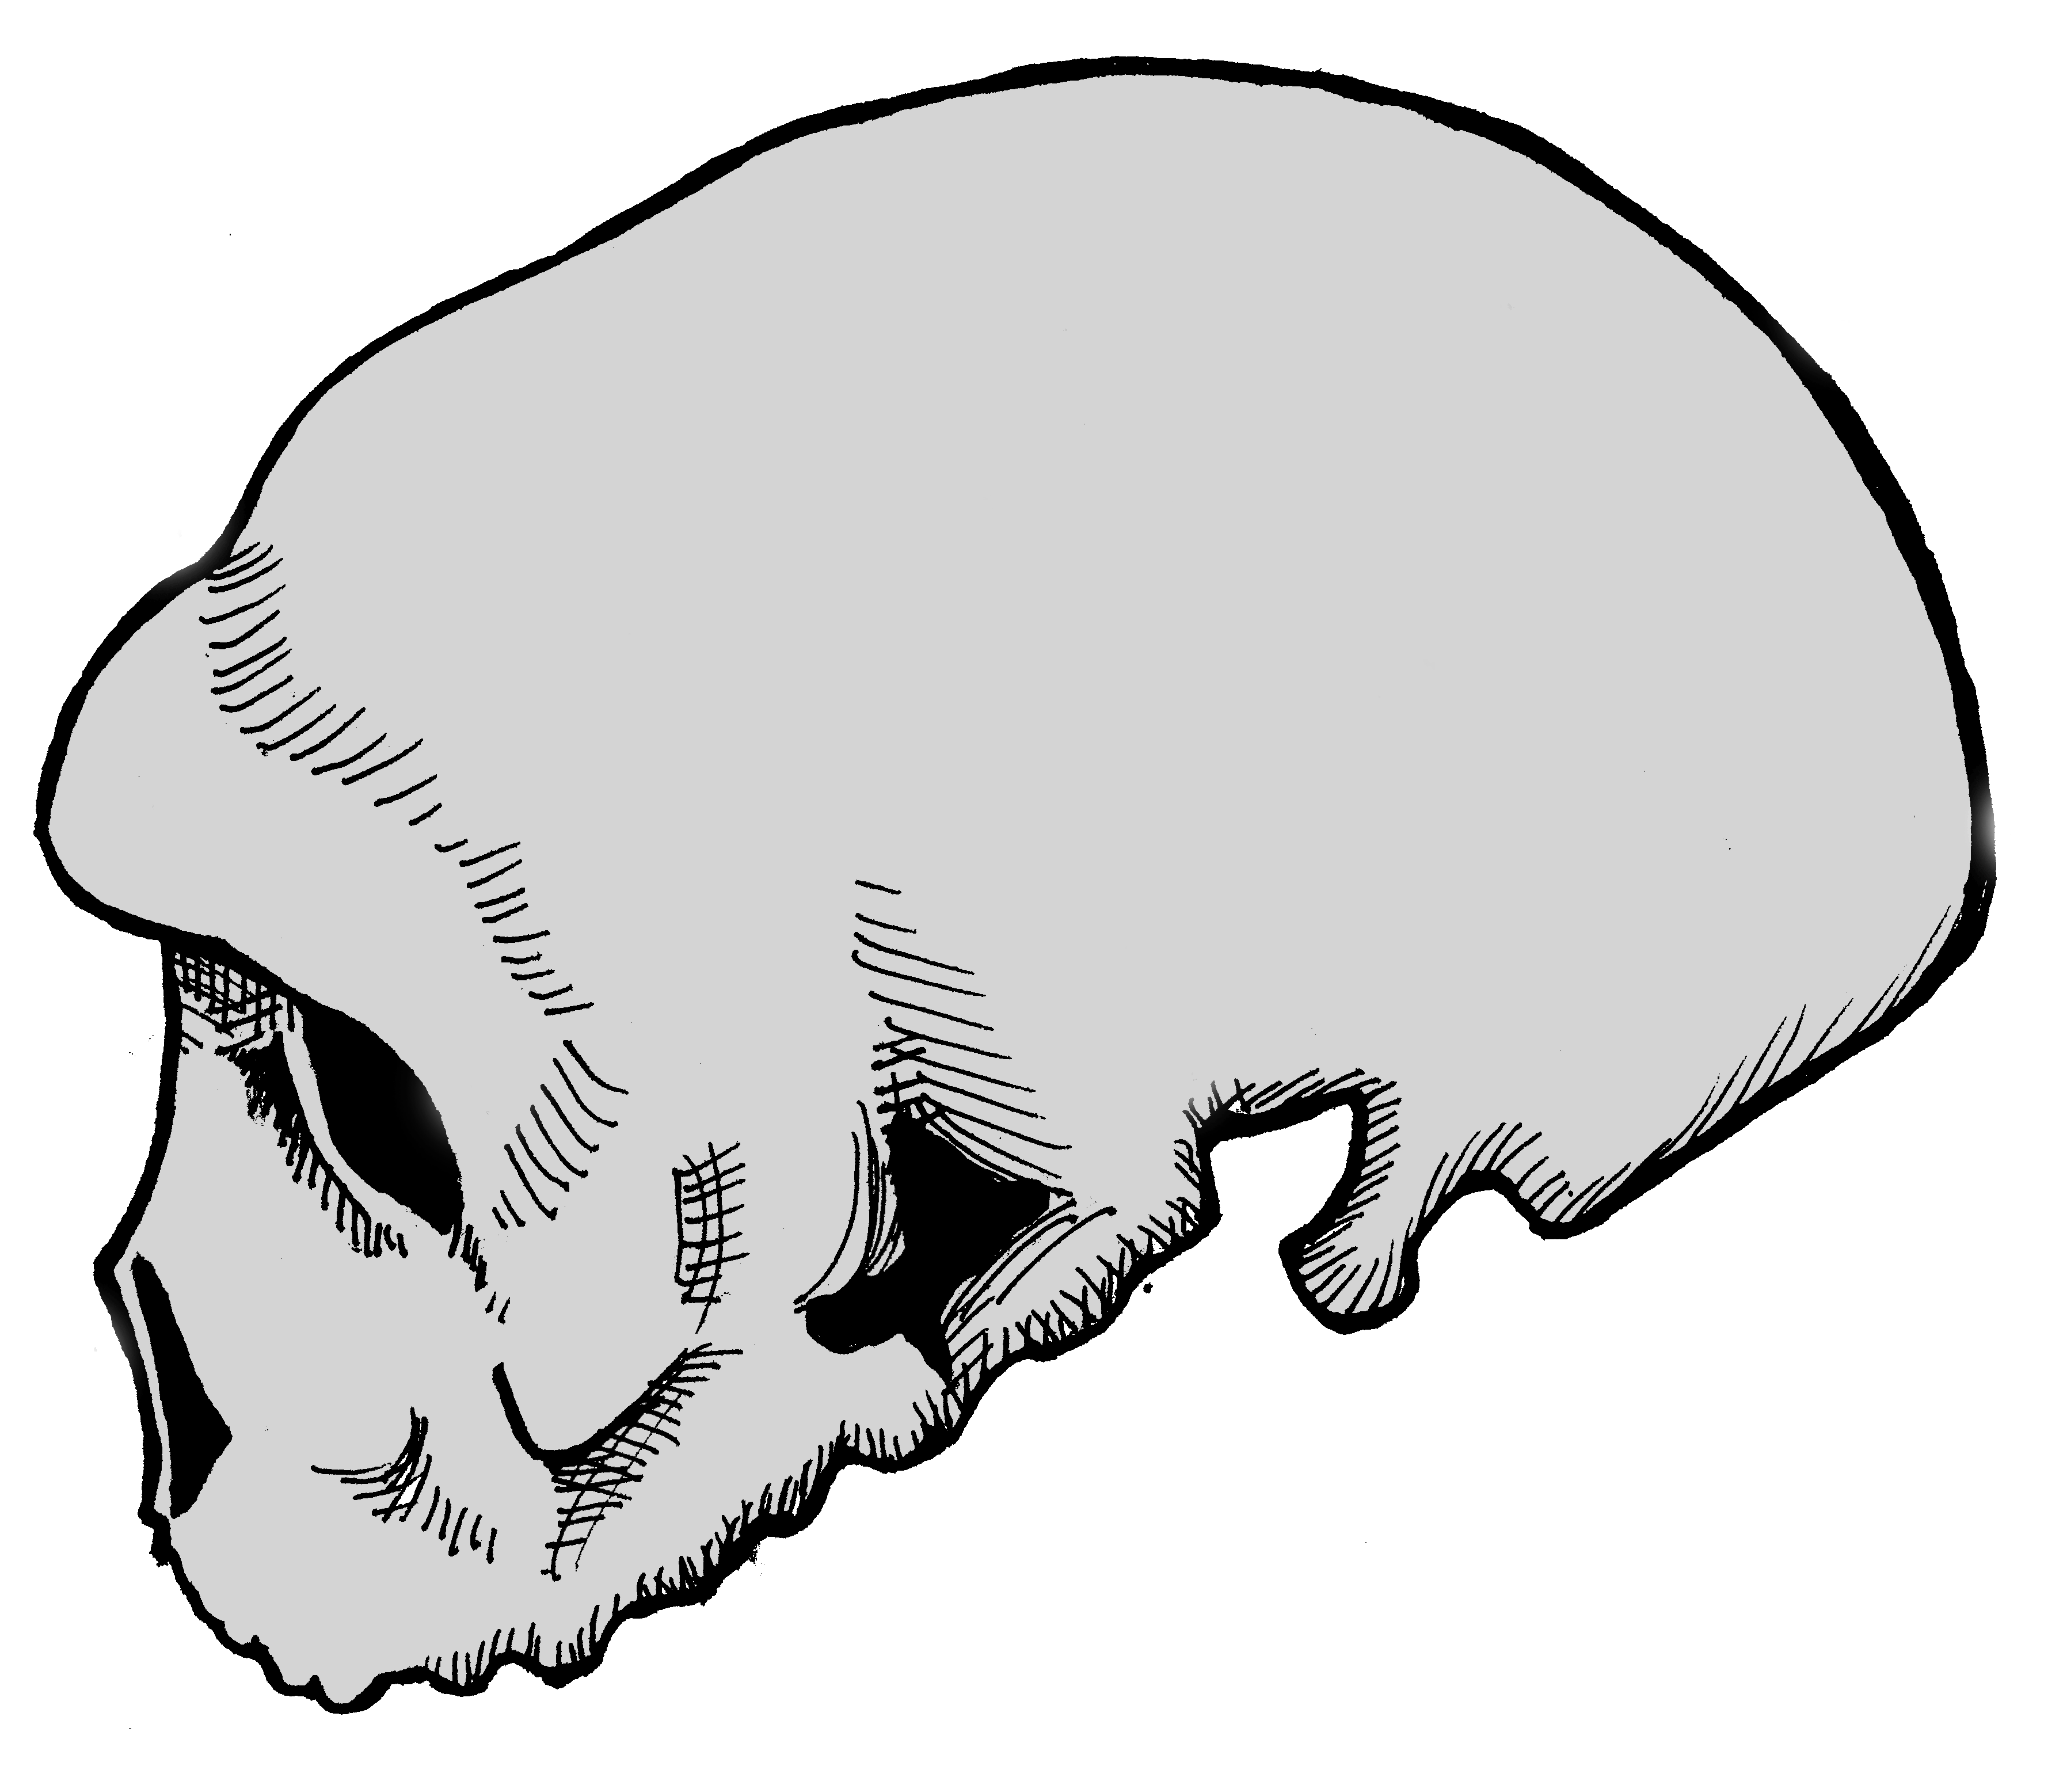 Side view of the Dali cranium.